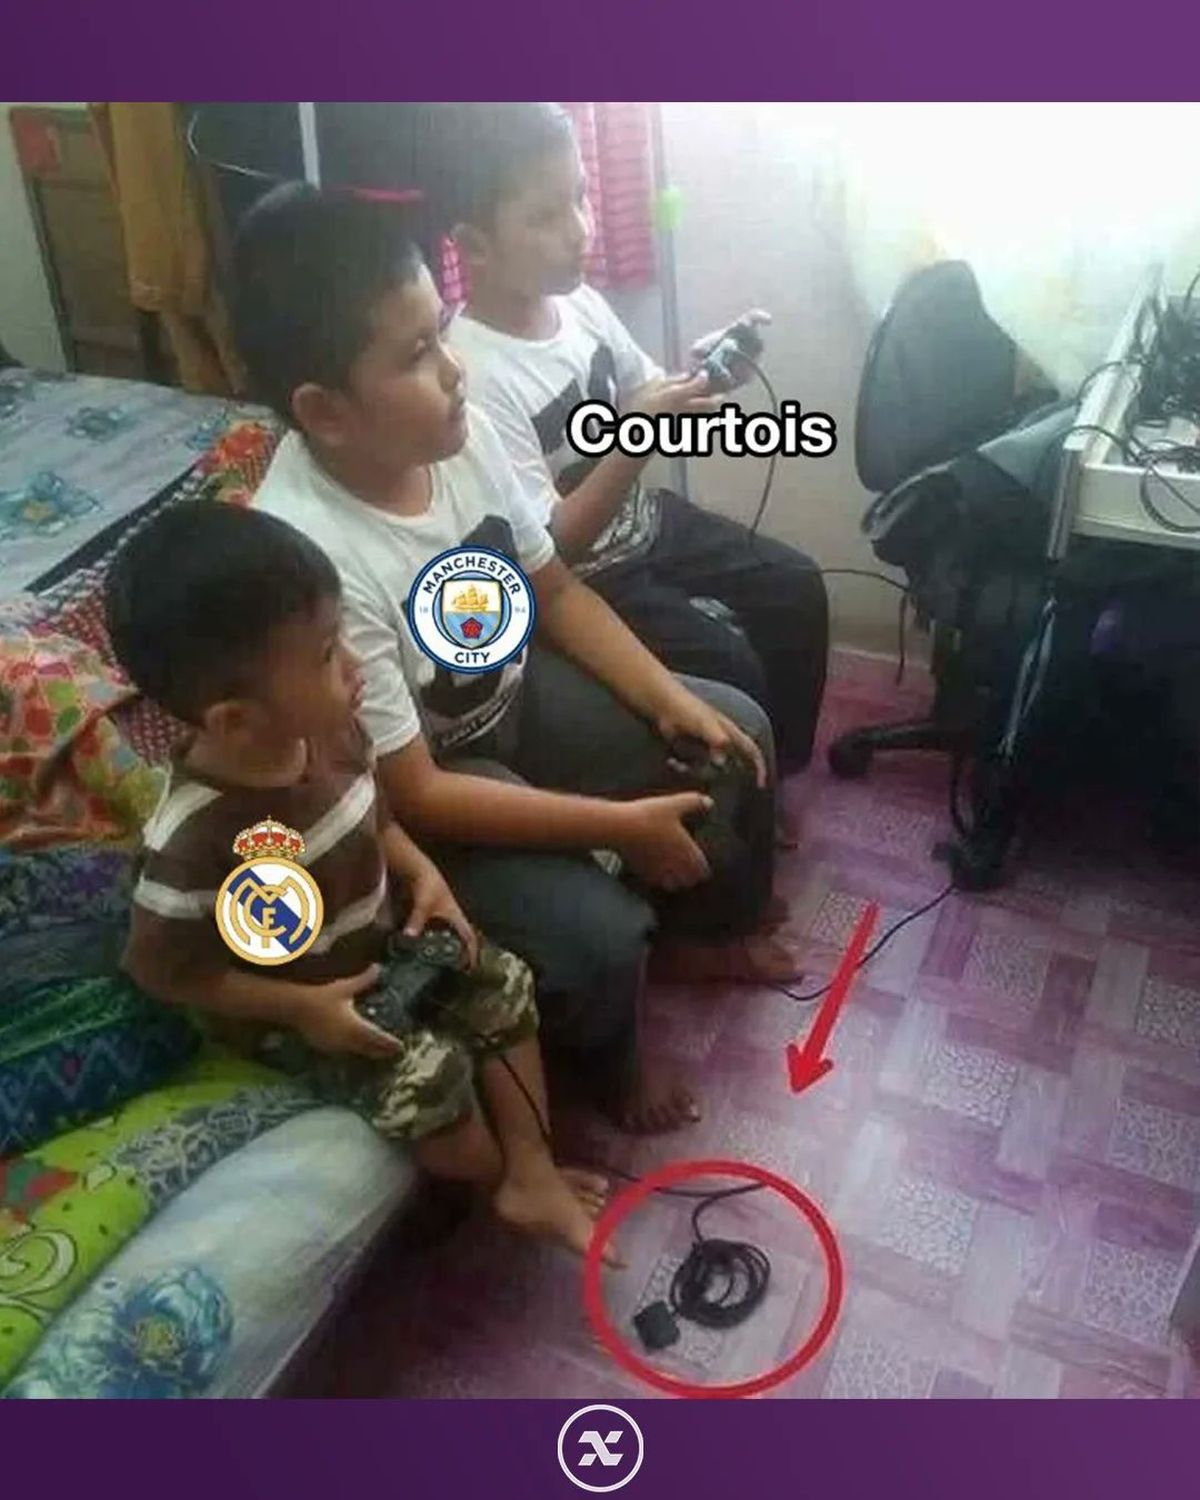 Meme Manchester City - Real Madrid 4-0